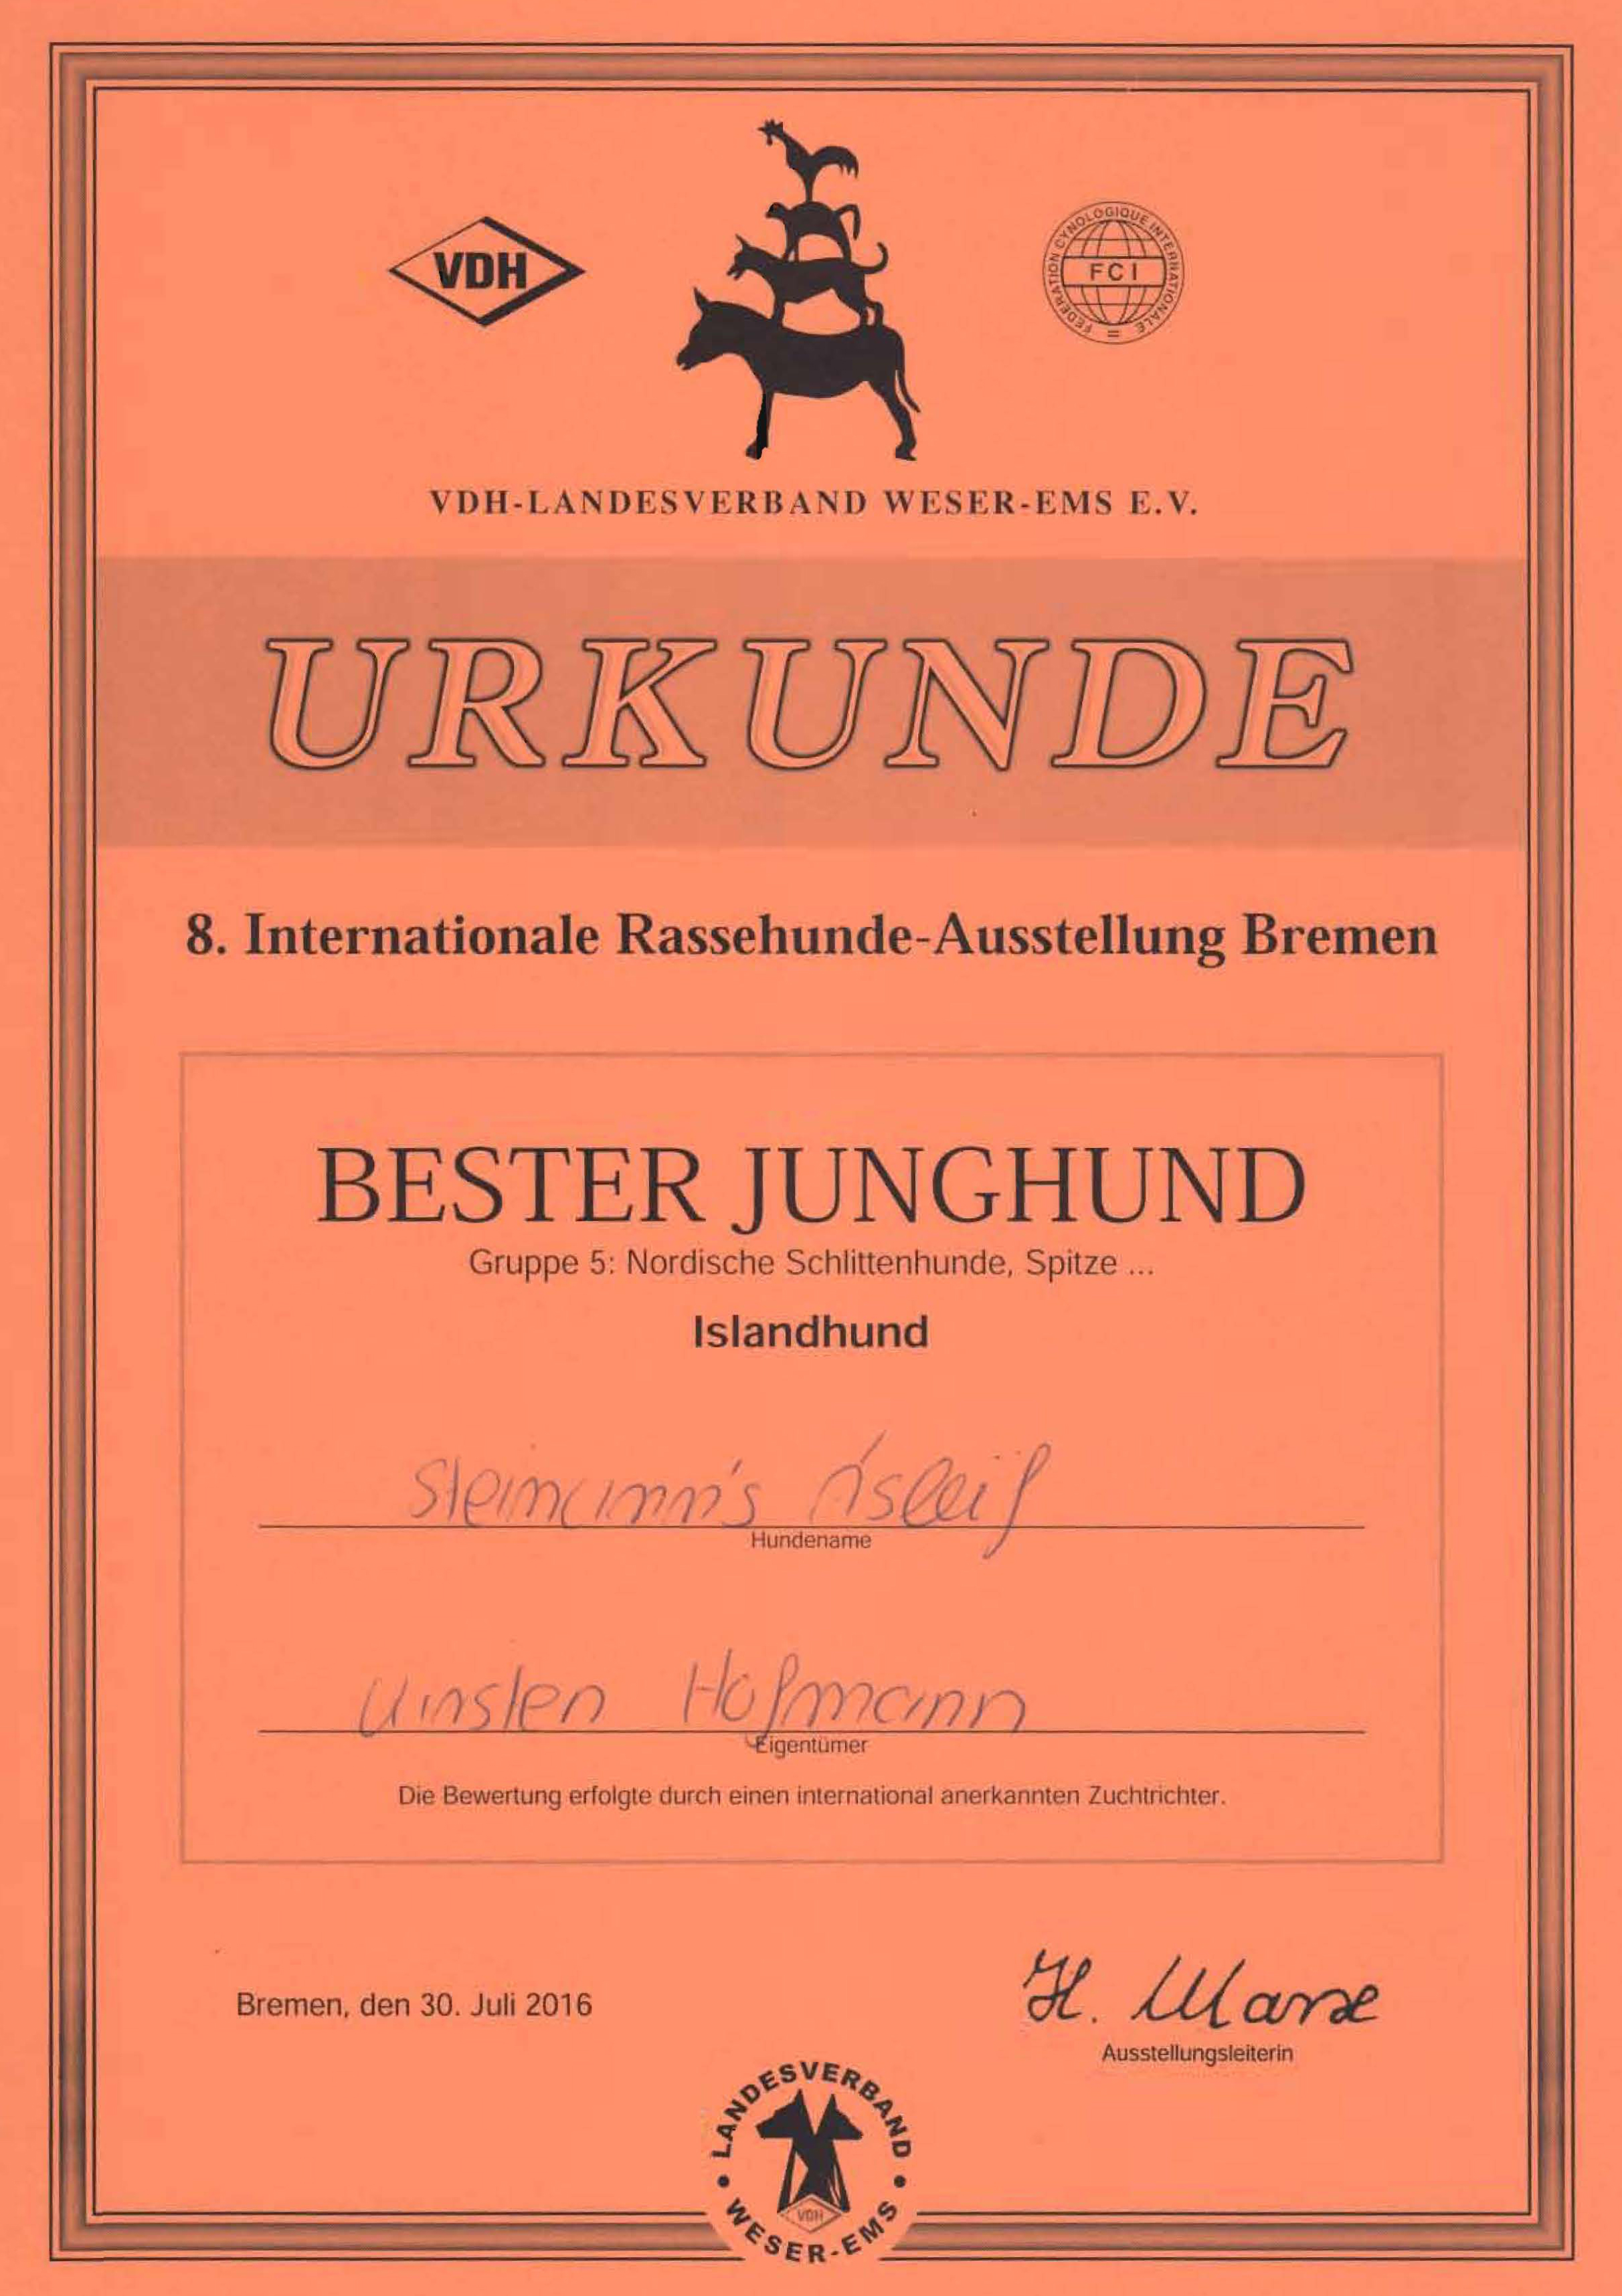 Show-International-Bremen-2016-Asleif-Bester-Junghund